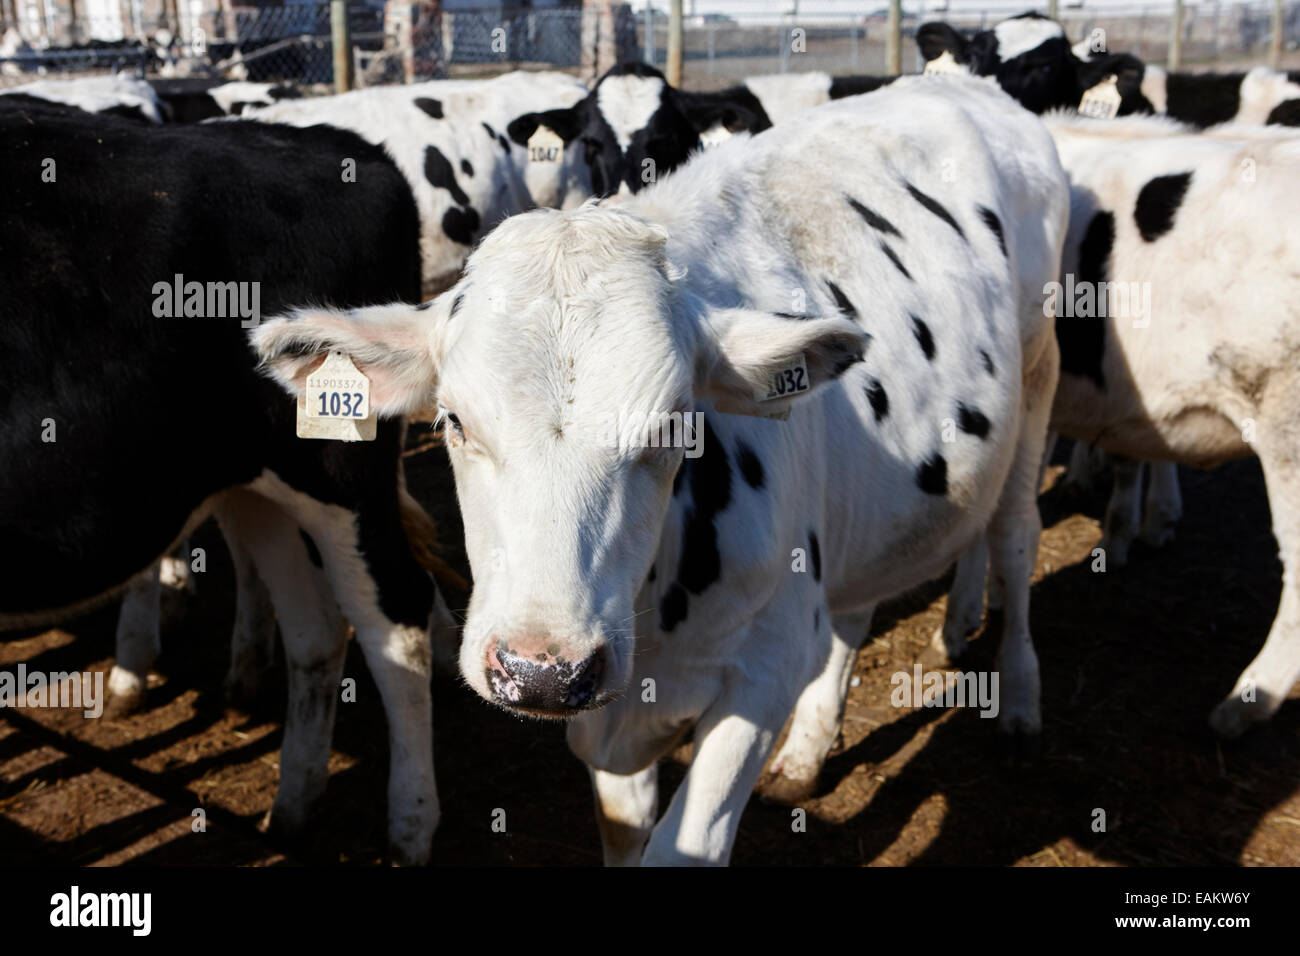 cow with ear tags beef cattle herd saskatoon Saskatchewan Canada Stock Photo